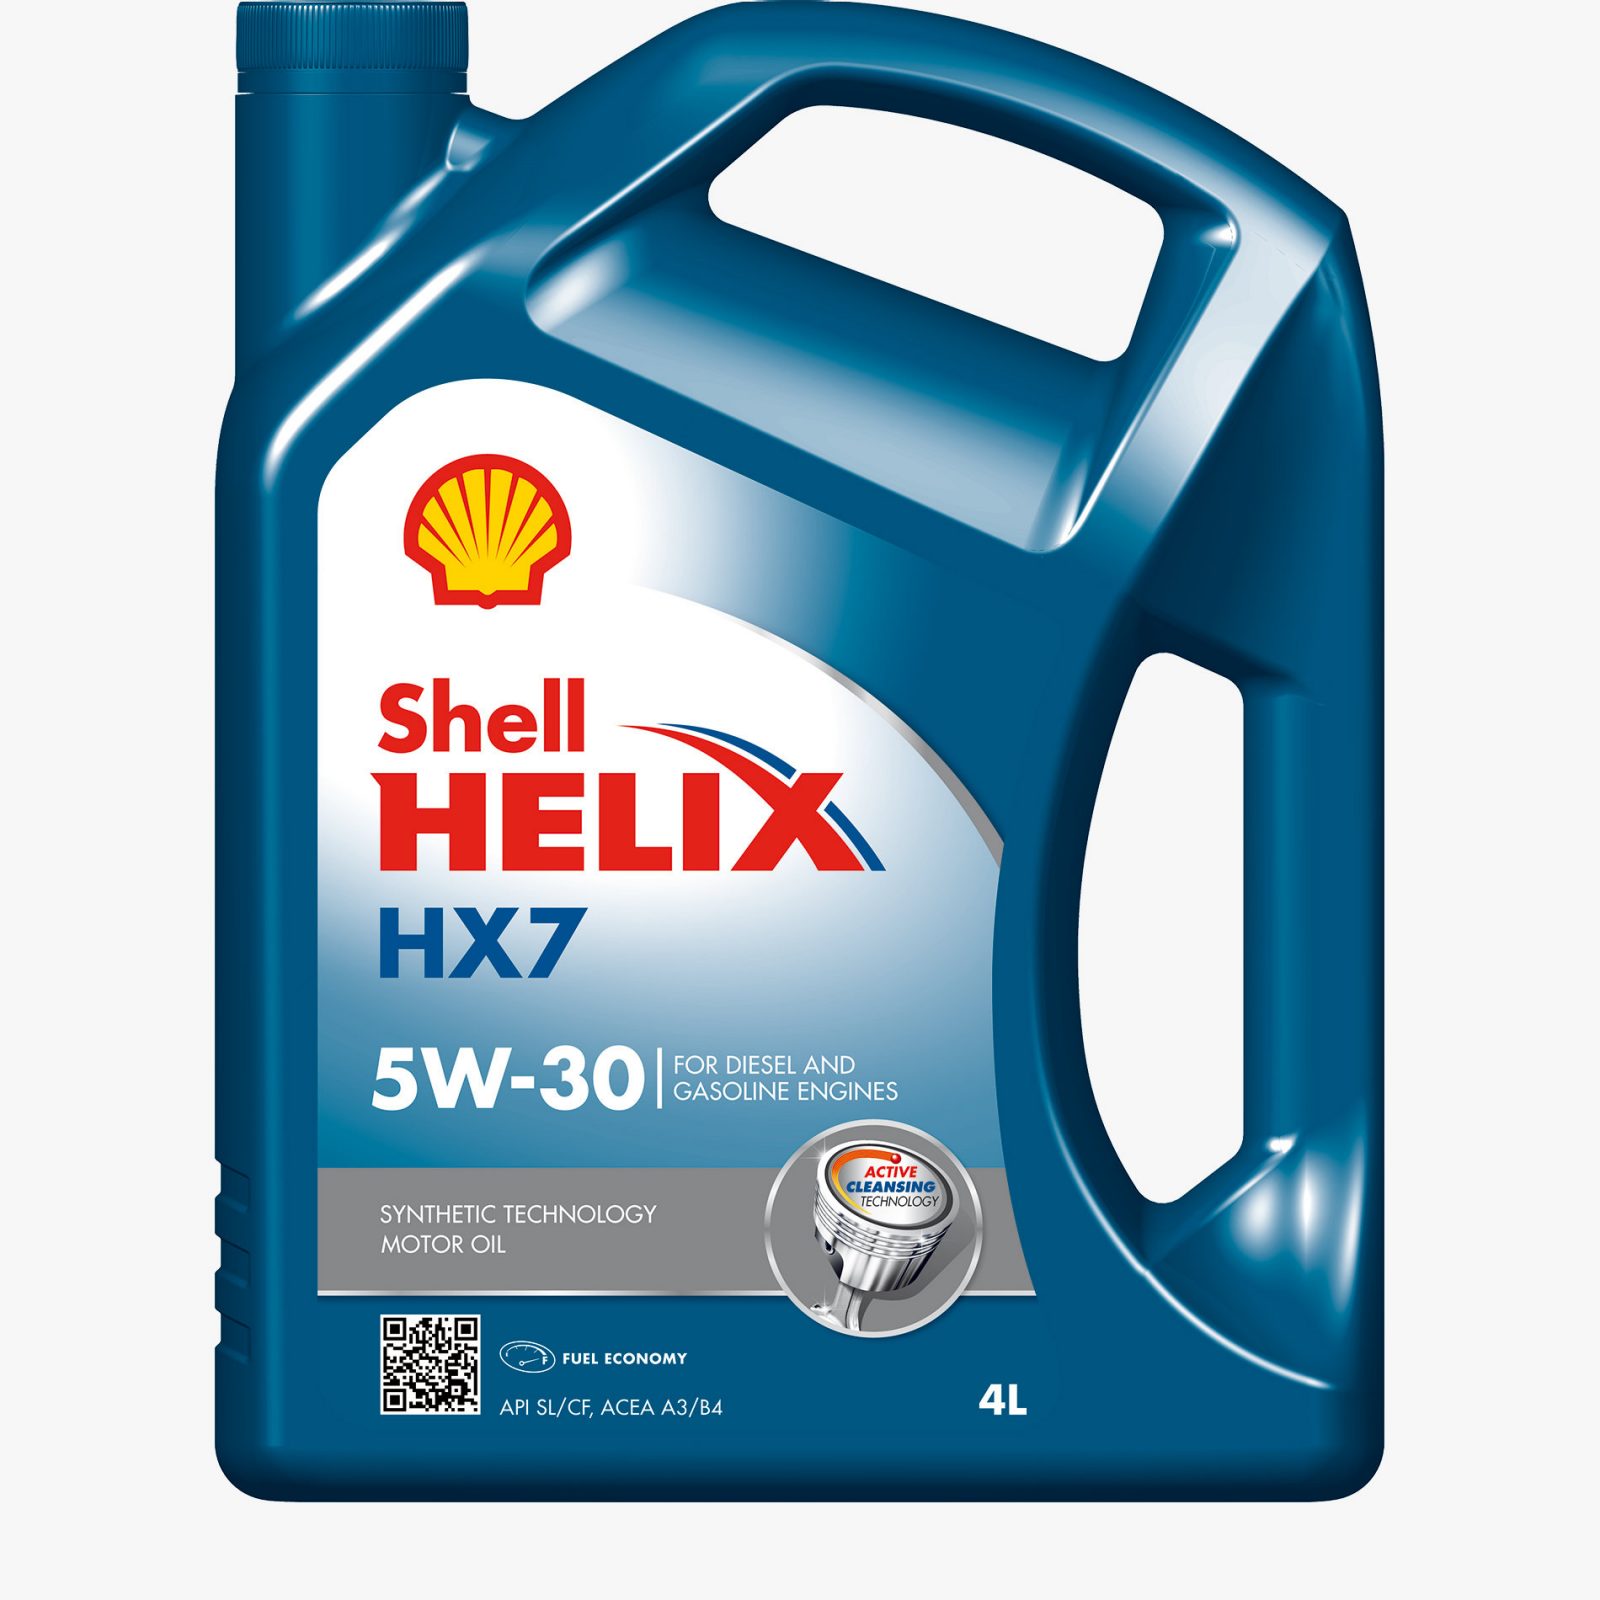 Shell 550040304 Engine oil Shell Helix HX7 5W-30, 4L 550040304